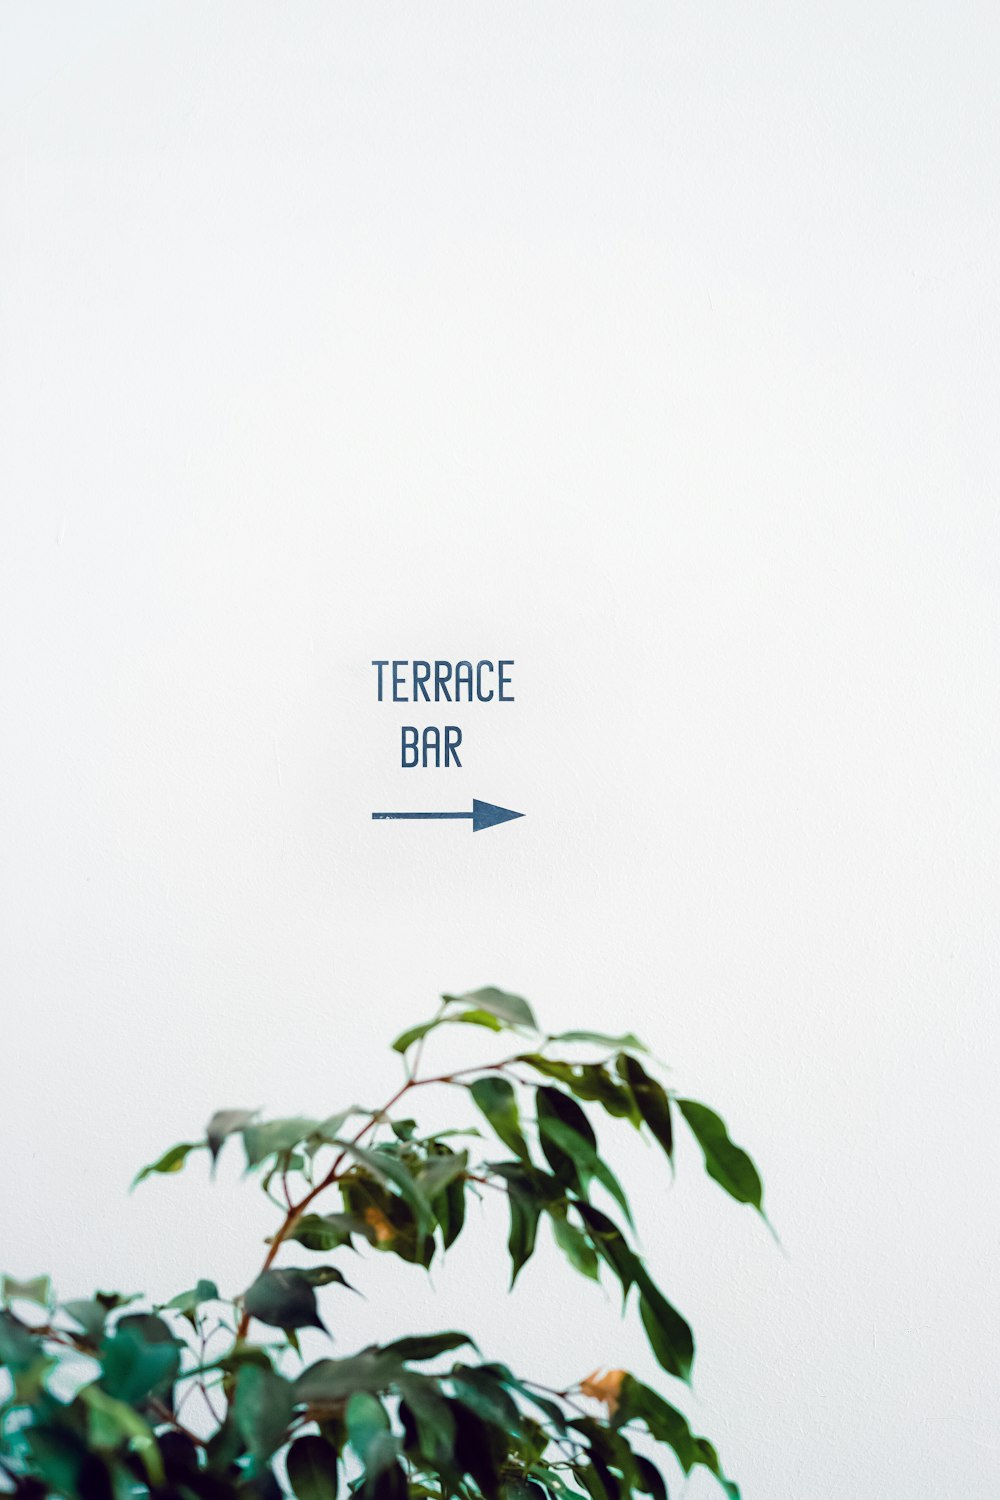 Terrace Bar text